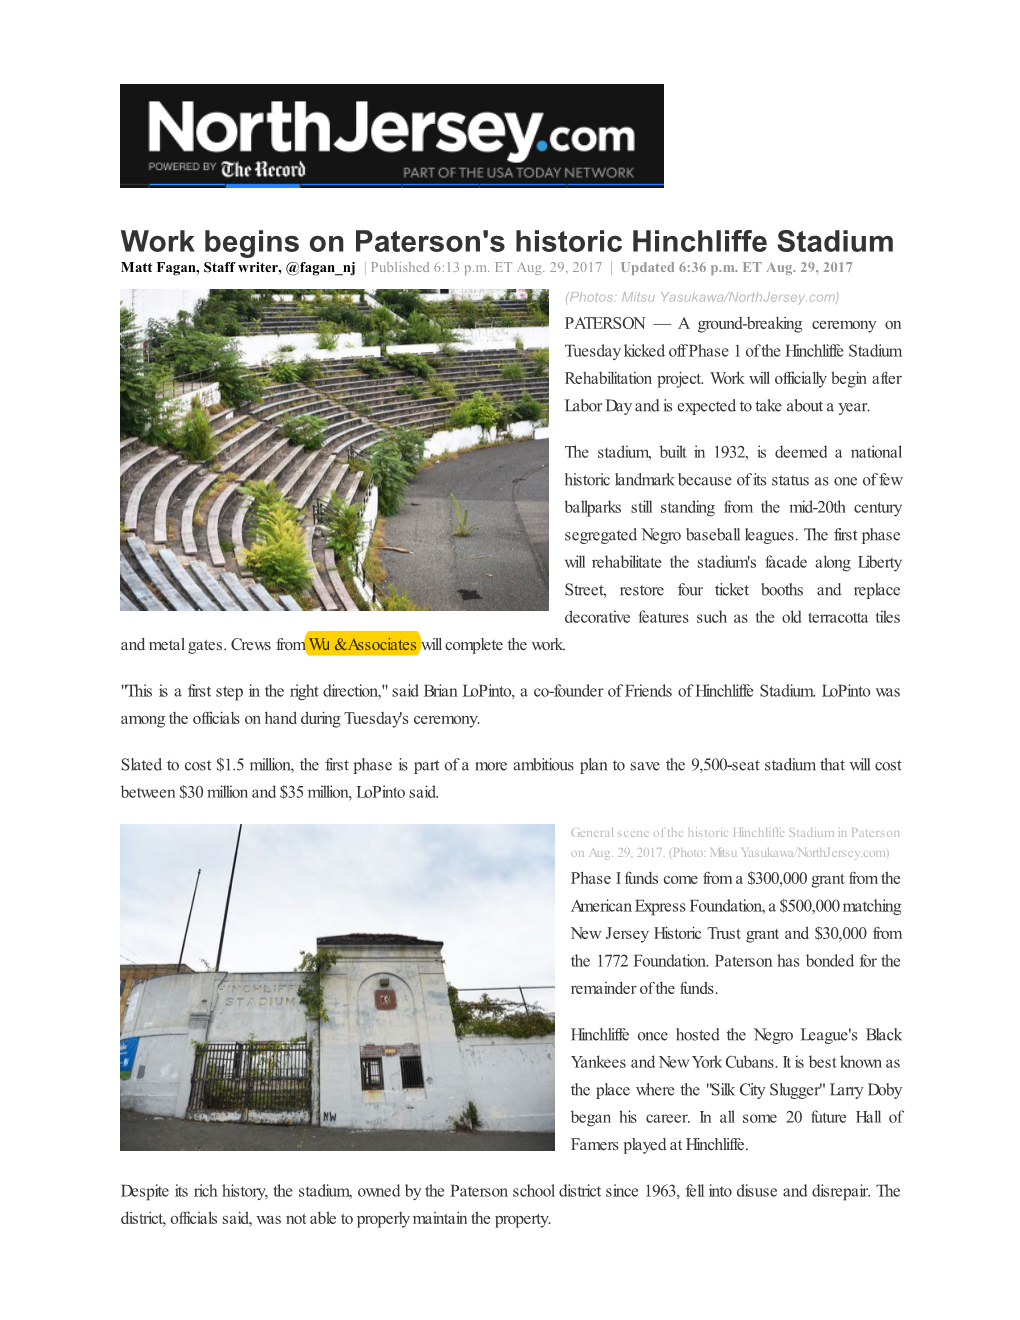 Work Begins on Paterson's Historic Hinchliffe Stadium Matt Fagan, Staff Writer, @Fagan Nj | Published 6:13 P.M